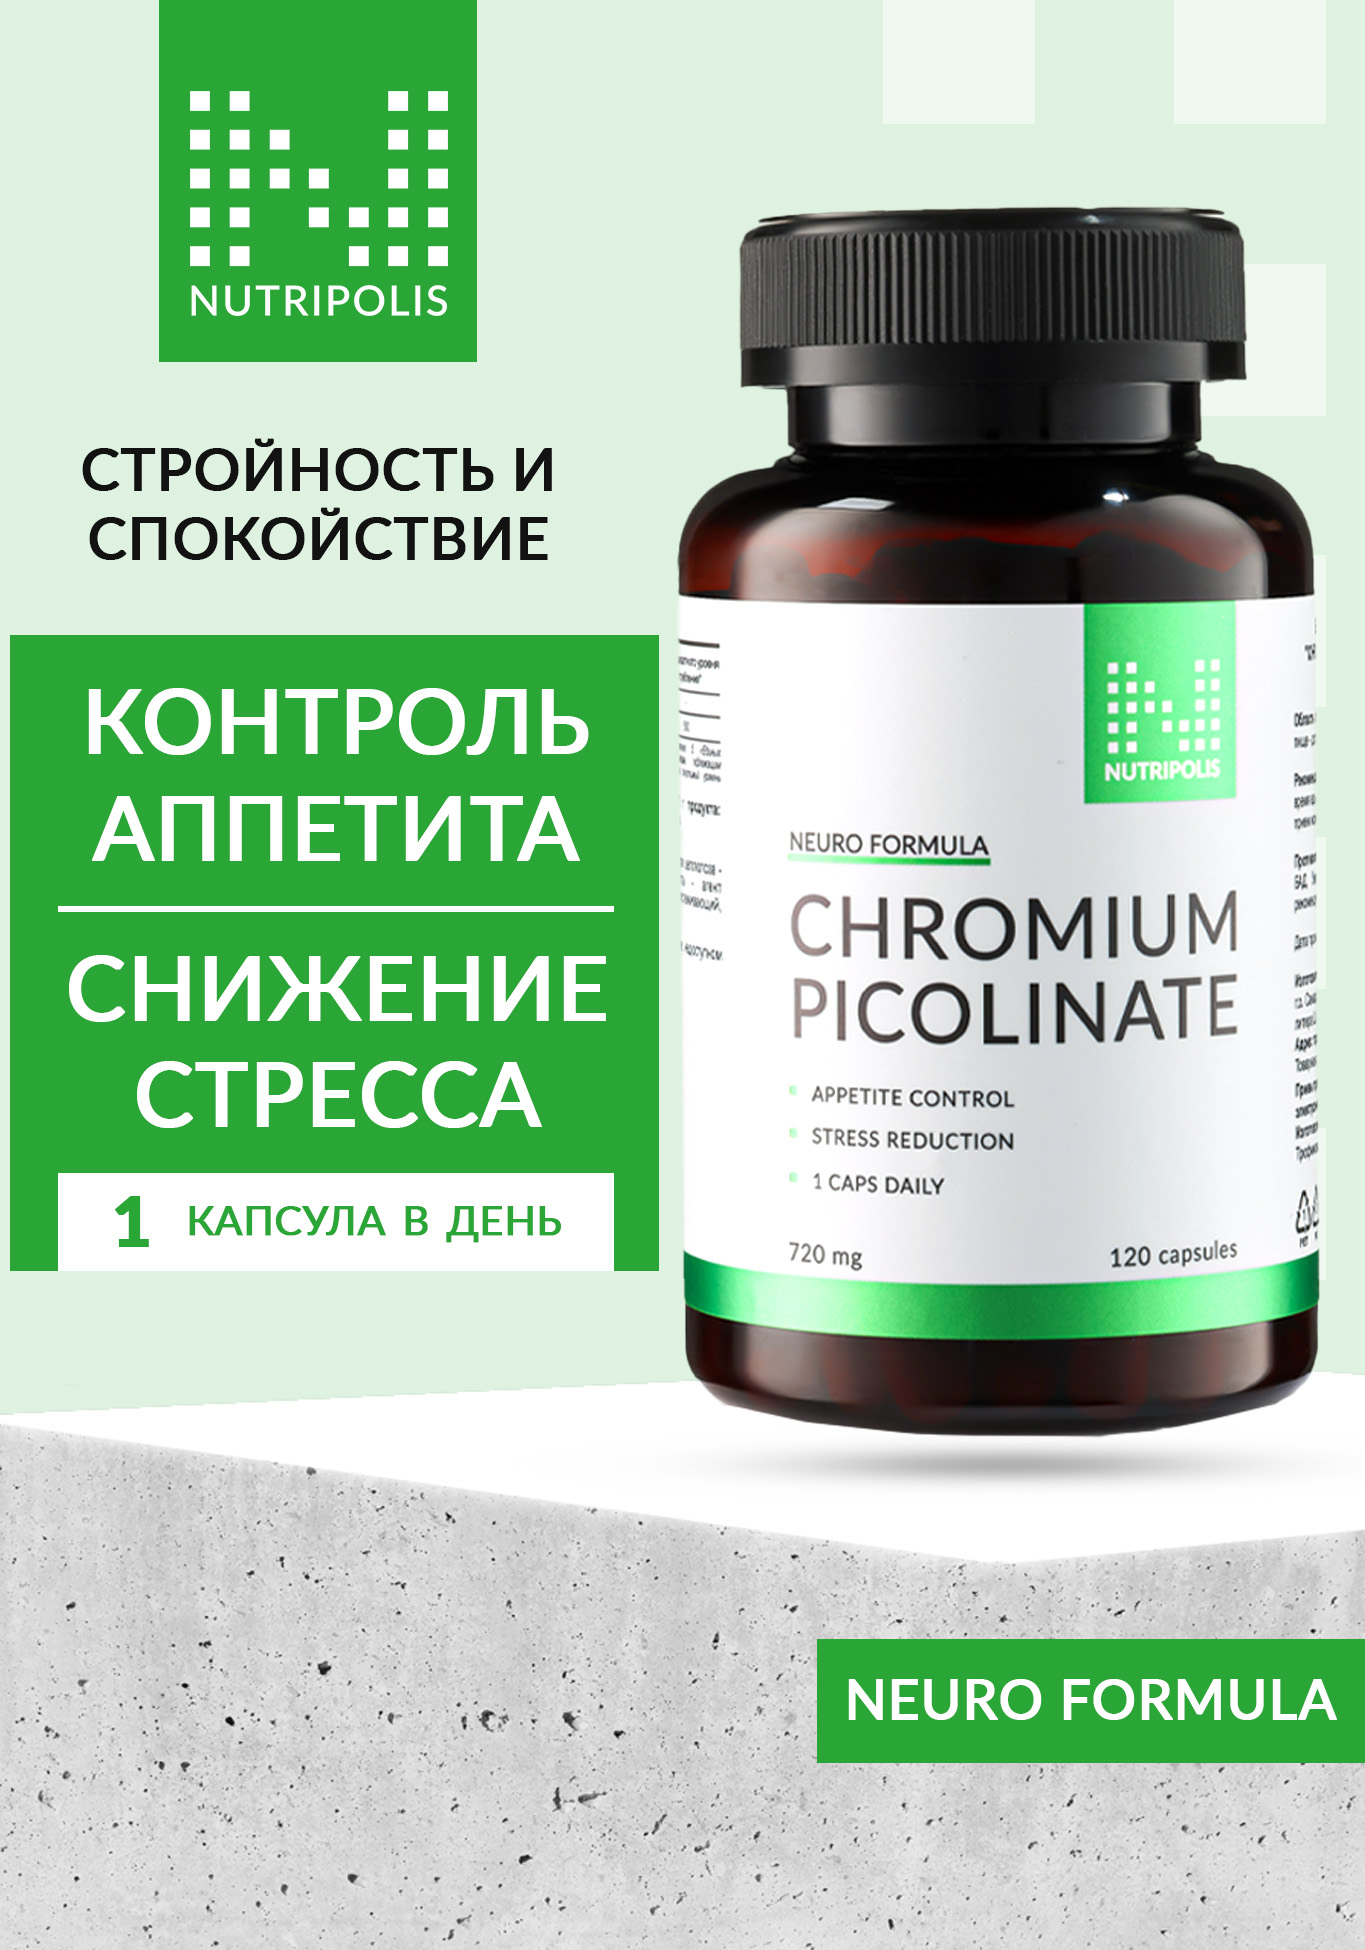 Chromium picolinate (Пиколинат хрома) NUTRIPOLIS